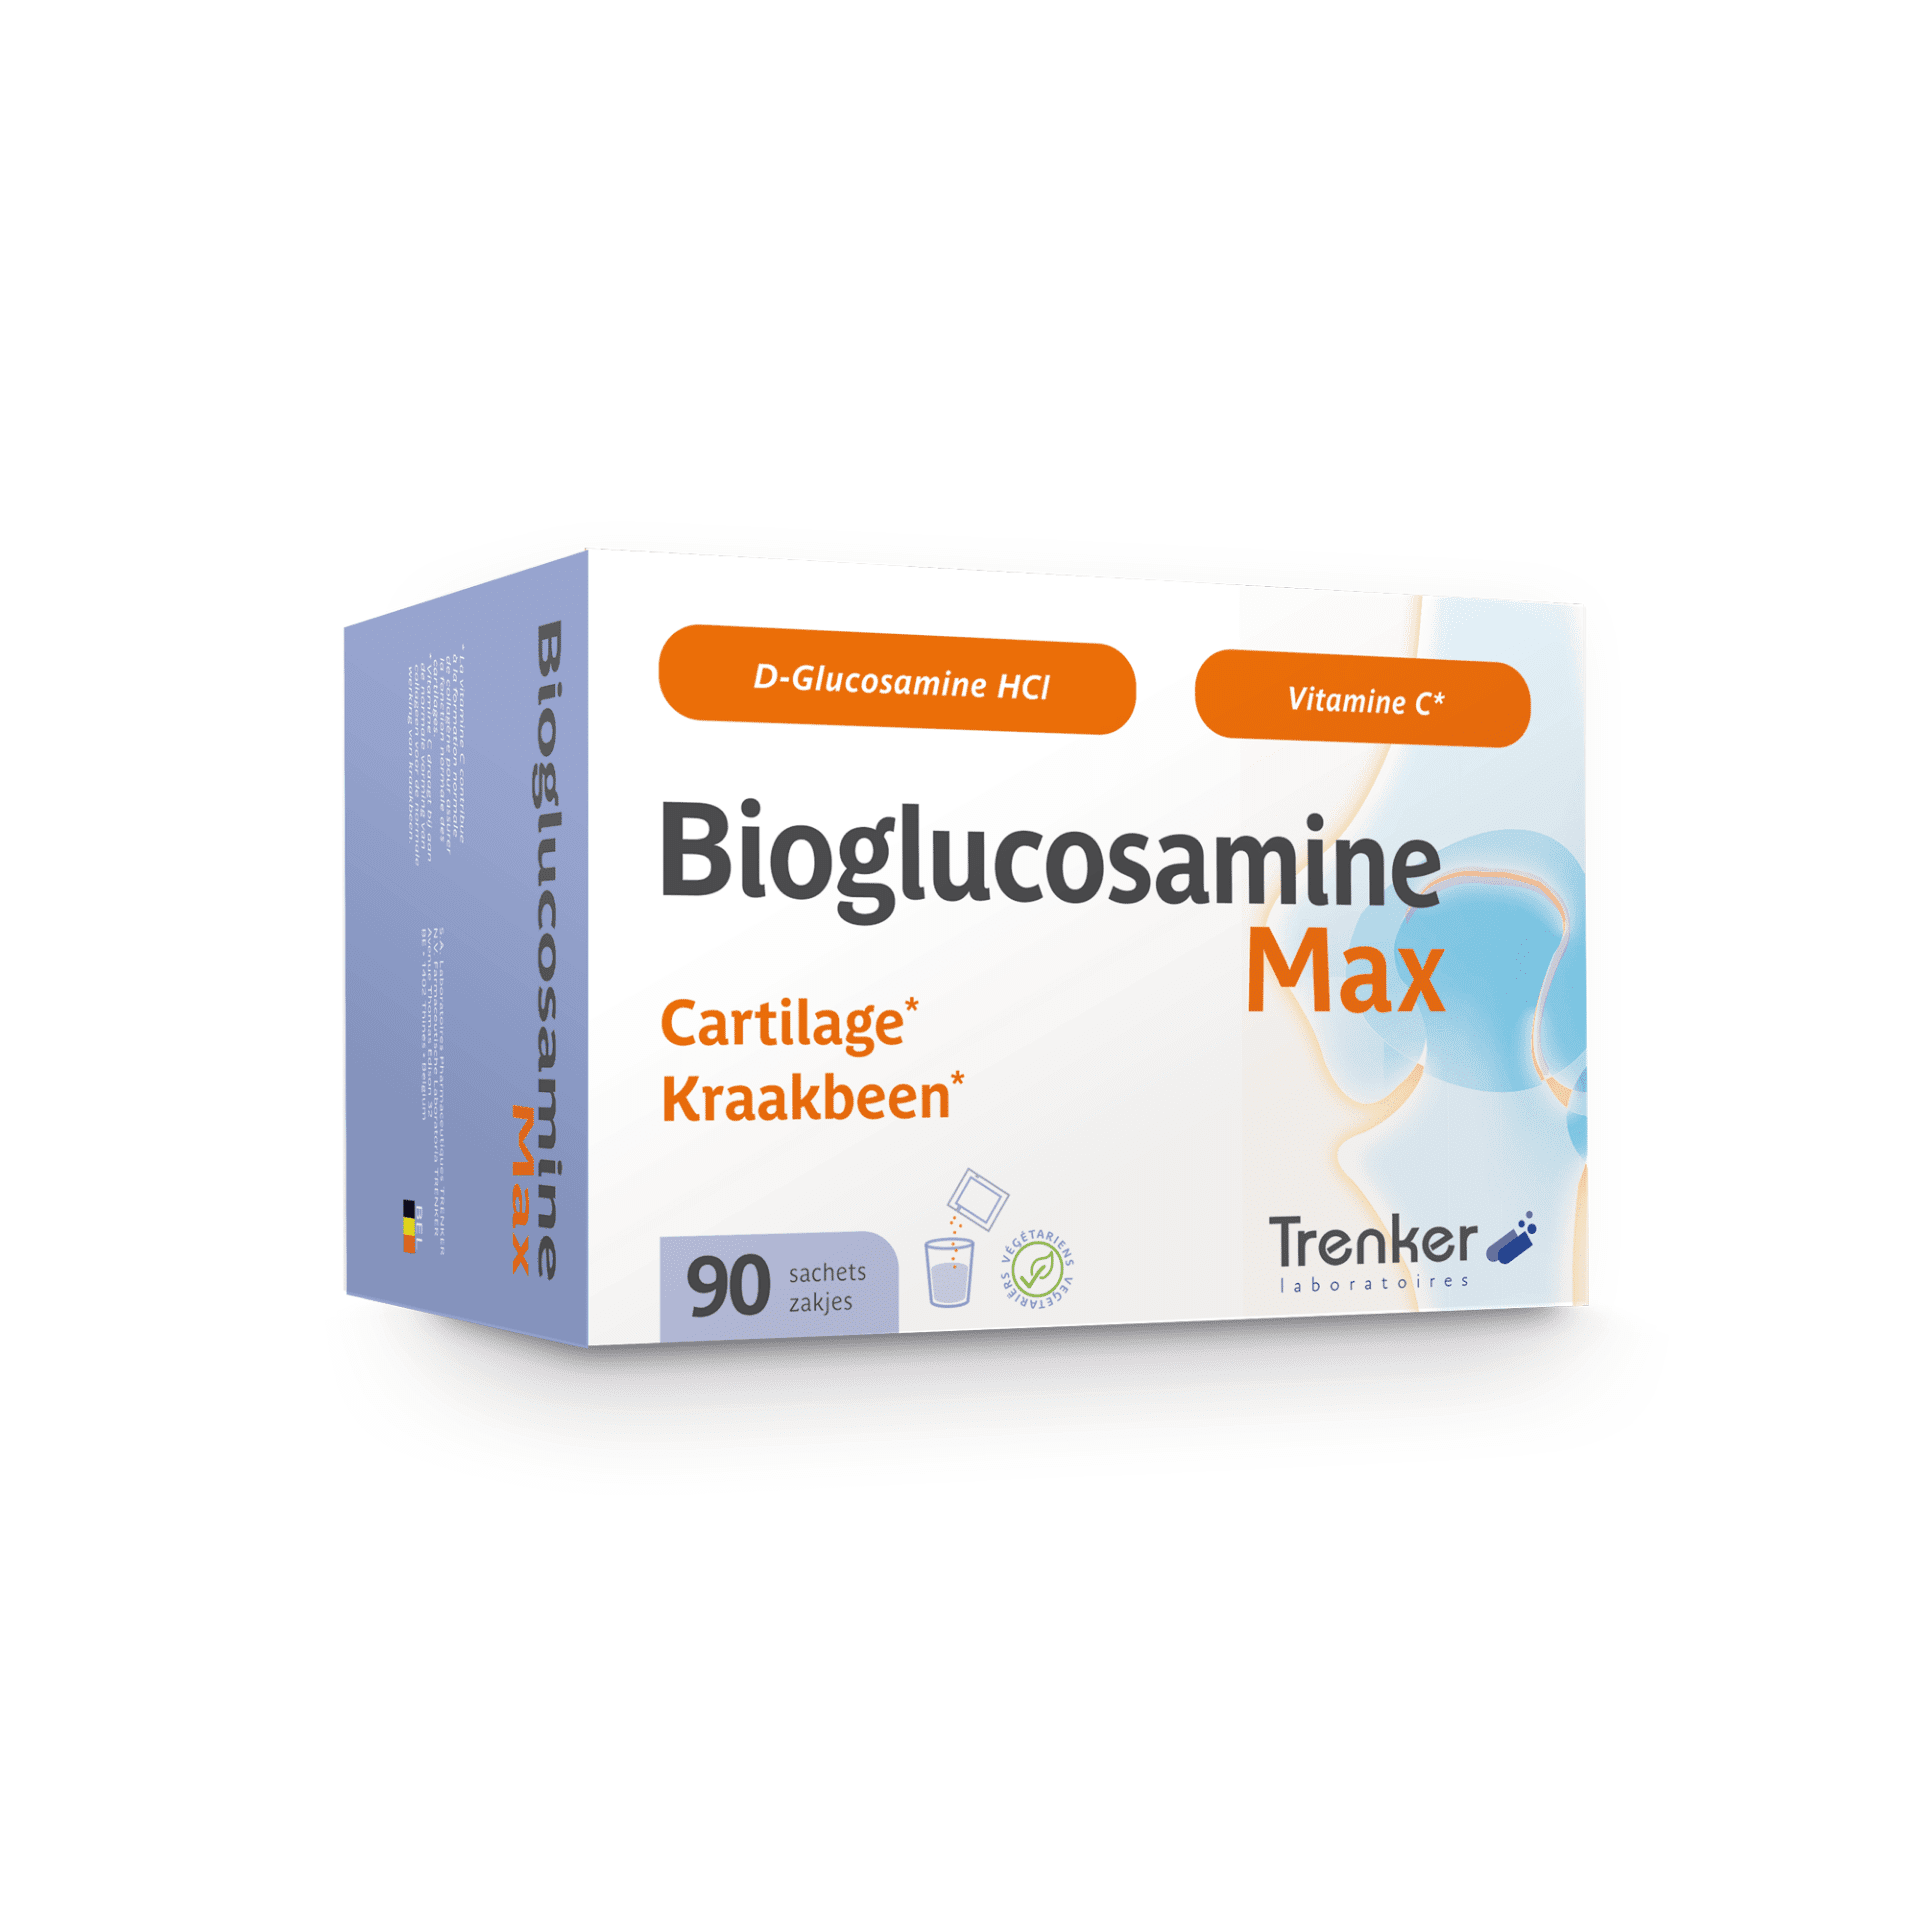 Bioglucosamine Max 90 sachets